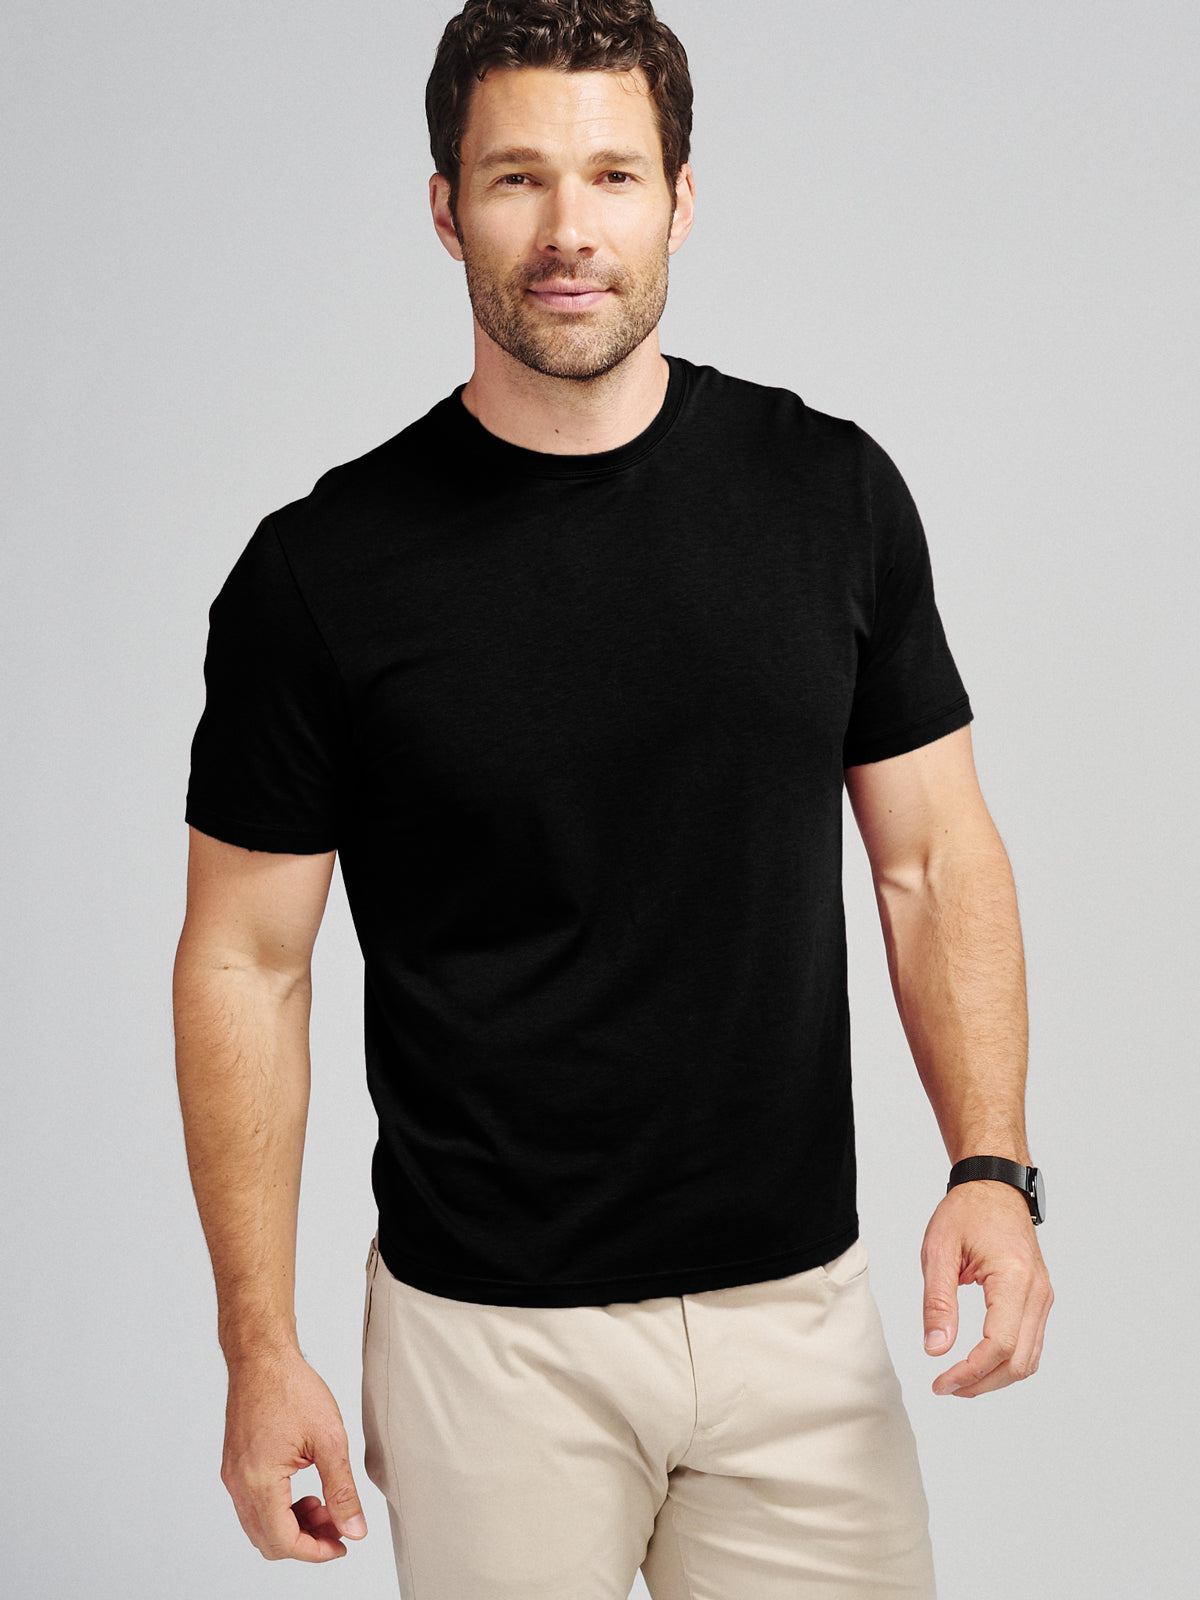 Pimaluxe T-Shirt tasc Performance (Black)